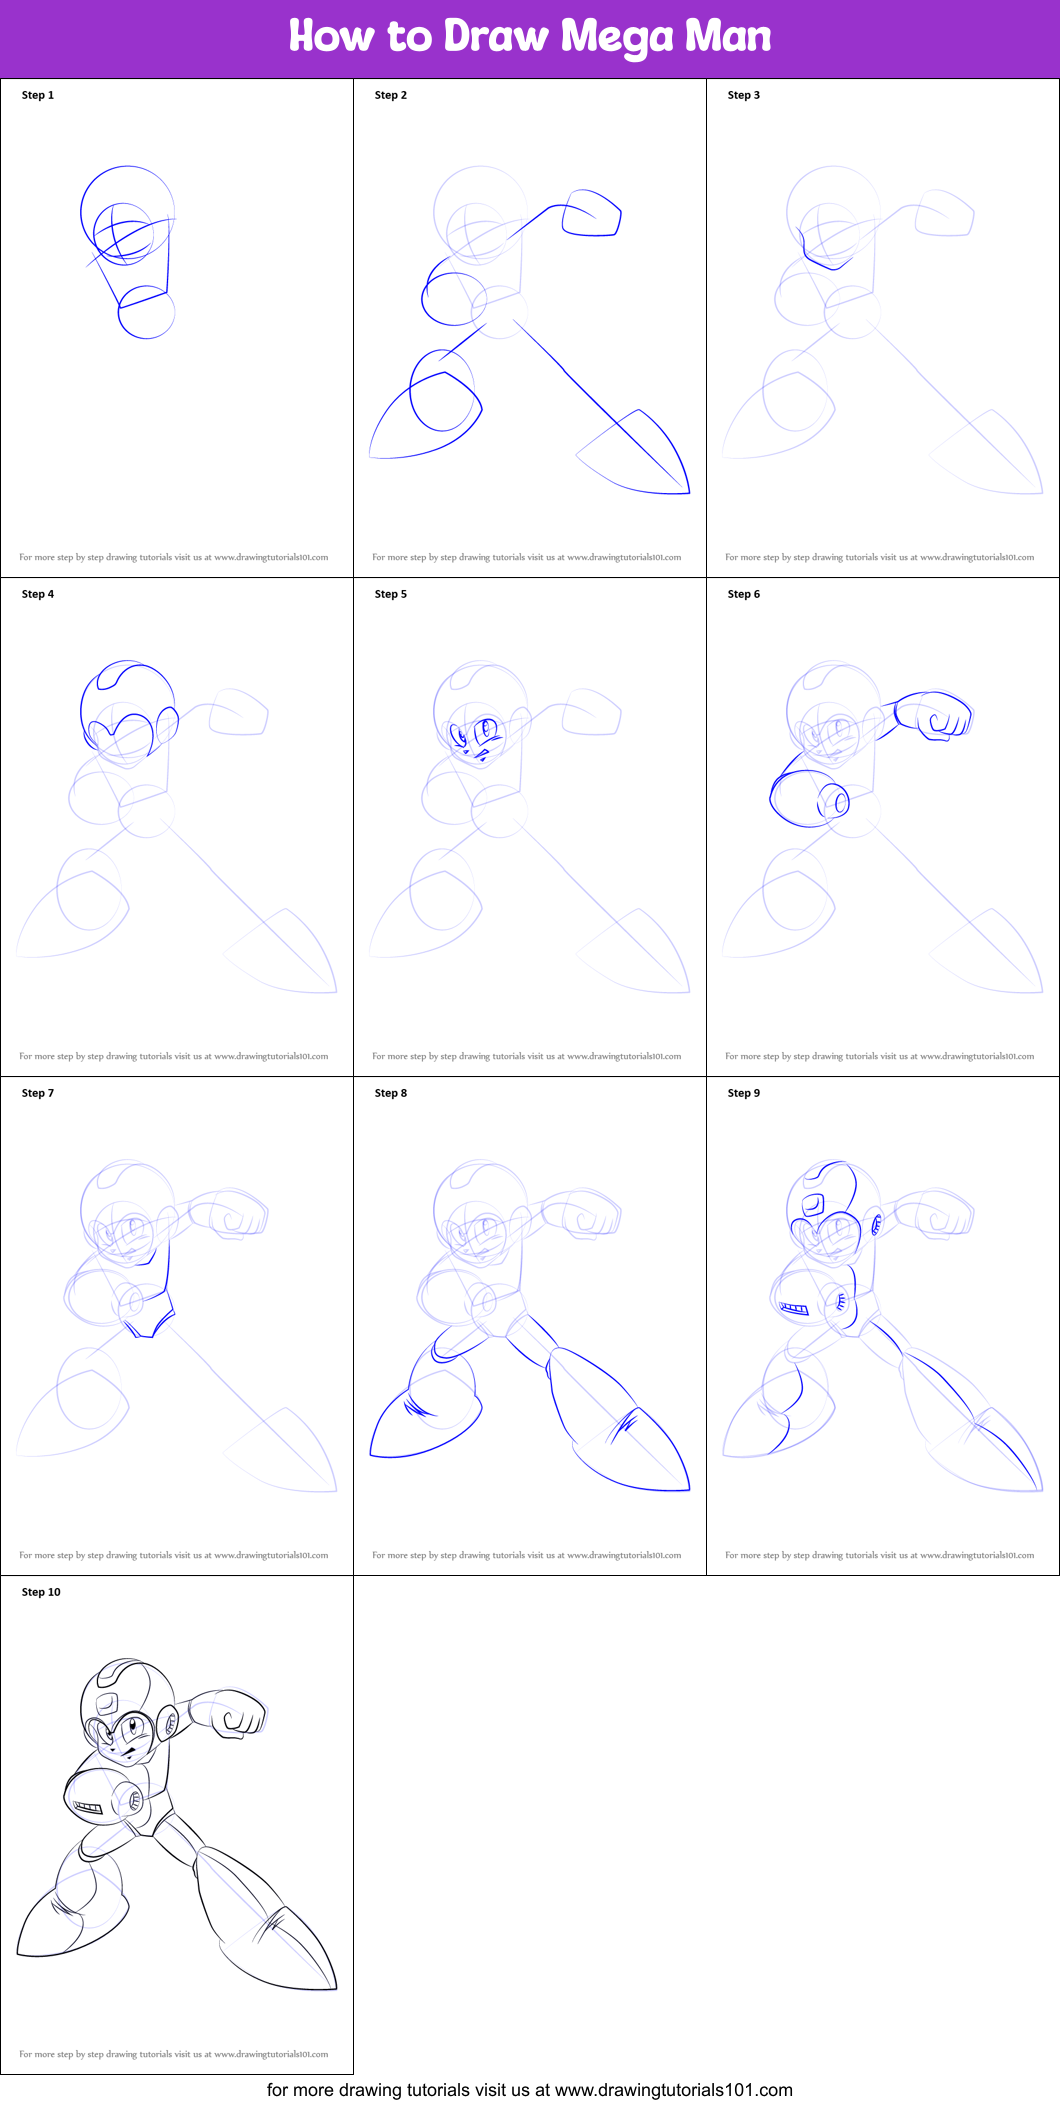 How to Draw Mega Man (Mega Man) Step by Step | DrawingTutorials101.com